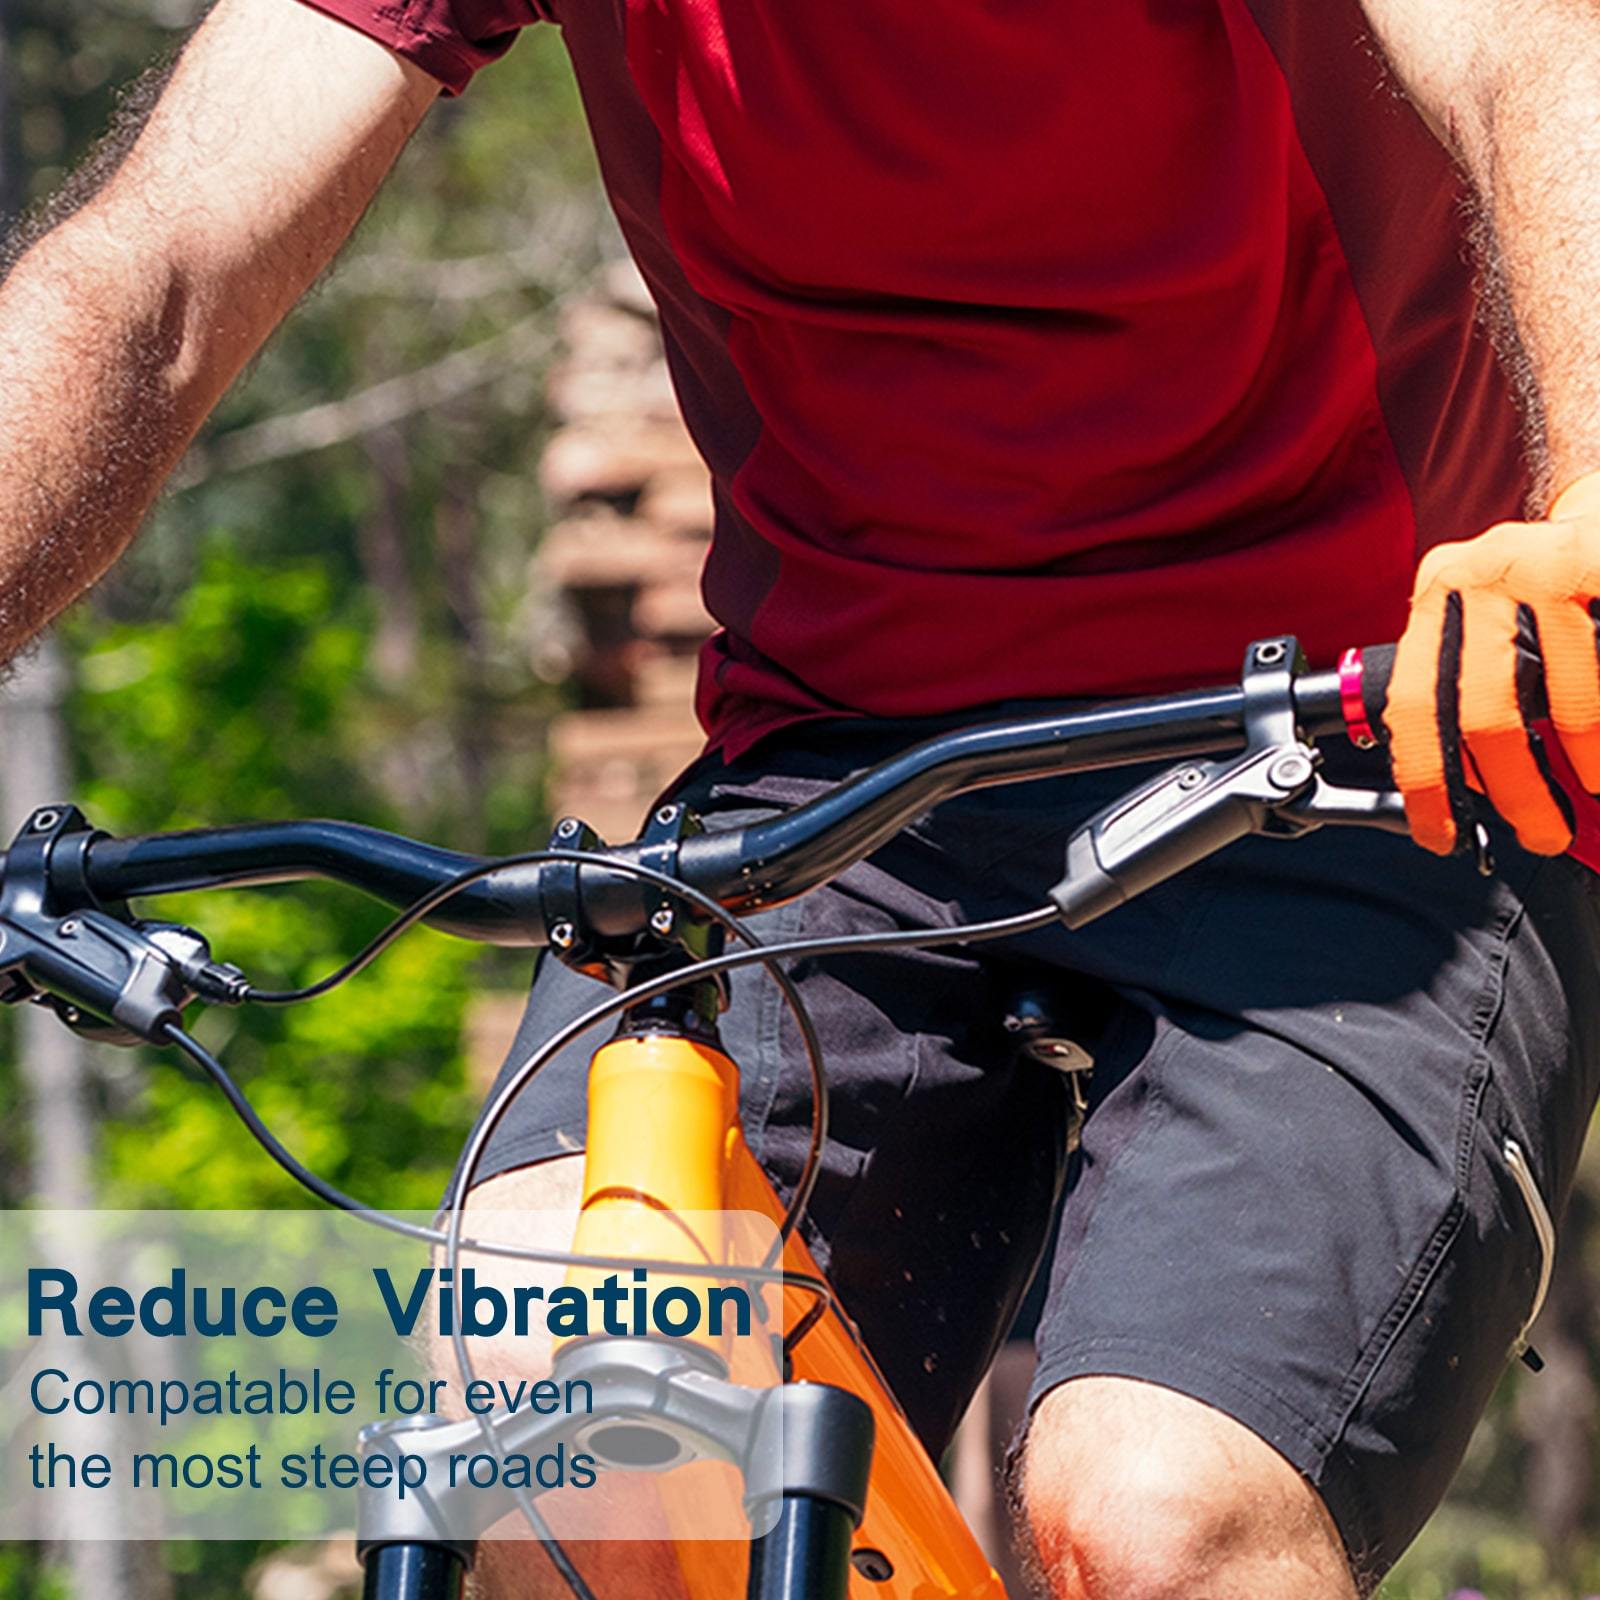 bike phone holder reducing vibration for steep roads